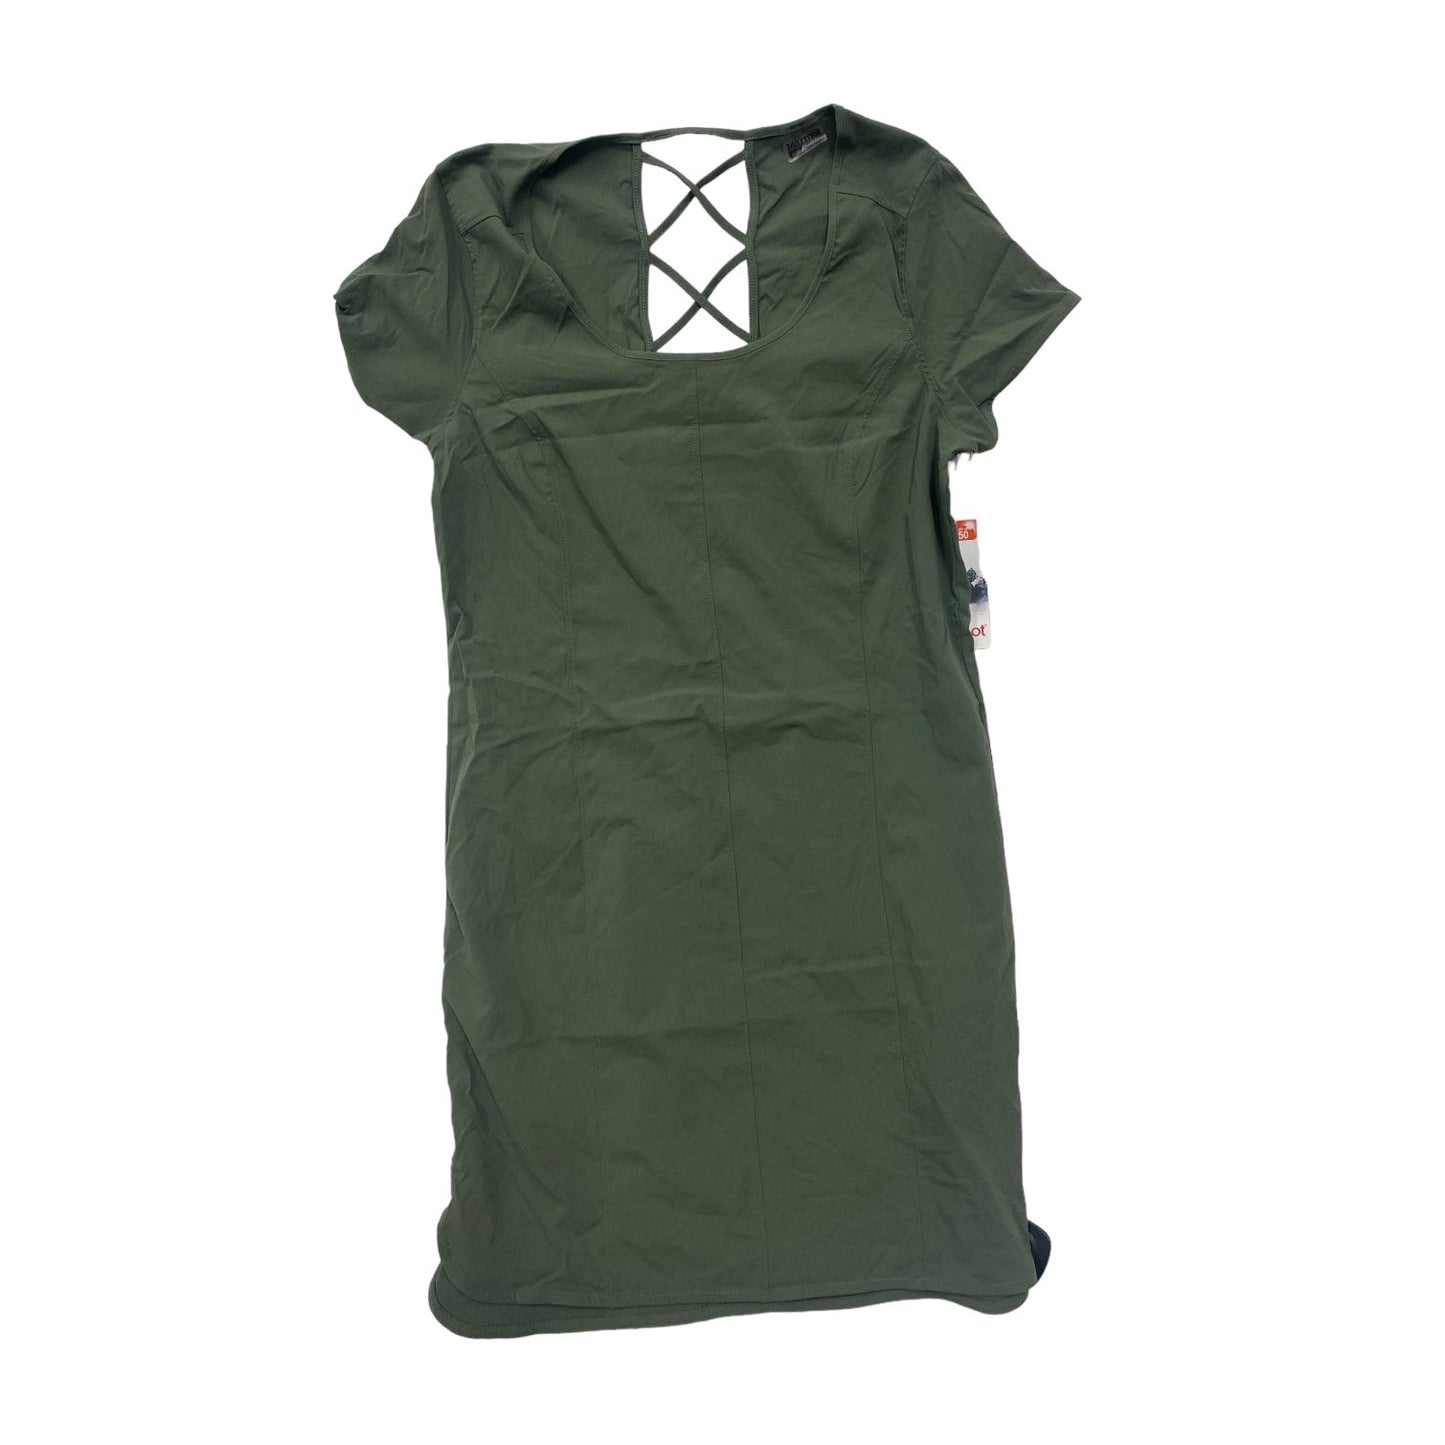 Green Athletic Dress Marmot, Size M